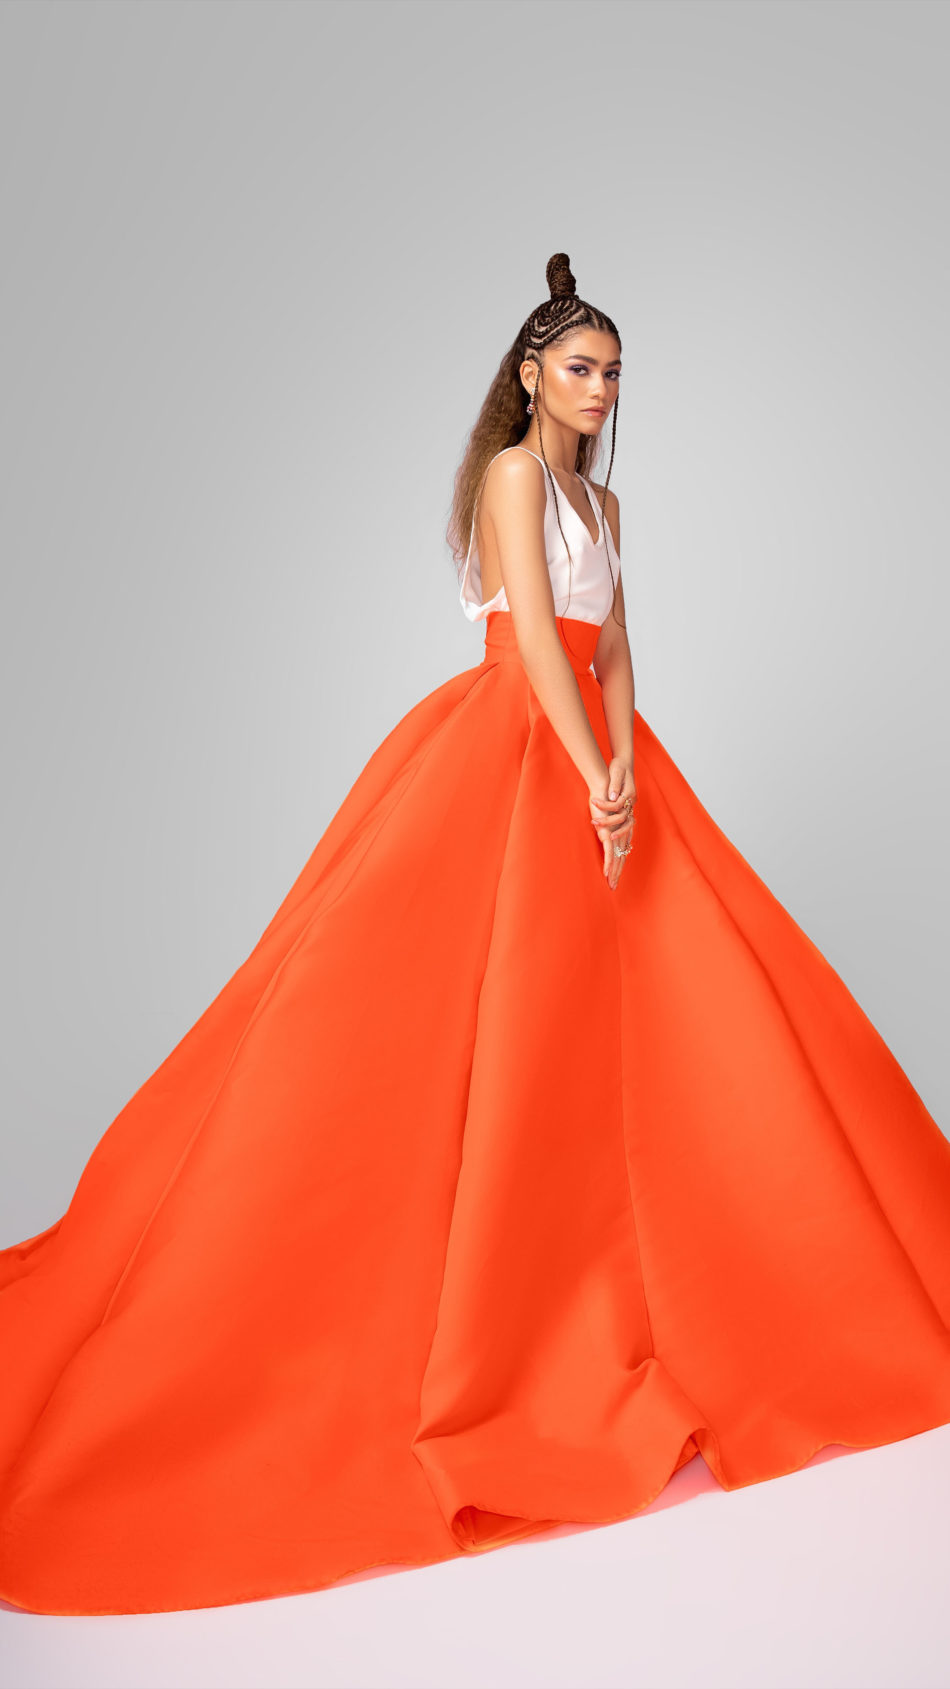 Zendaya In Beautiful Orange Dress 2021 Photoshoot 4K Ultra HD Mobile Wallpaper